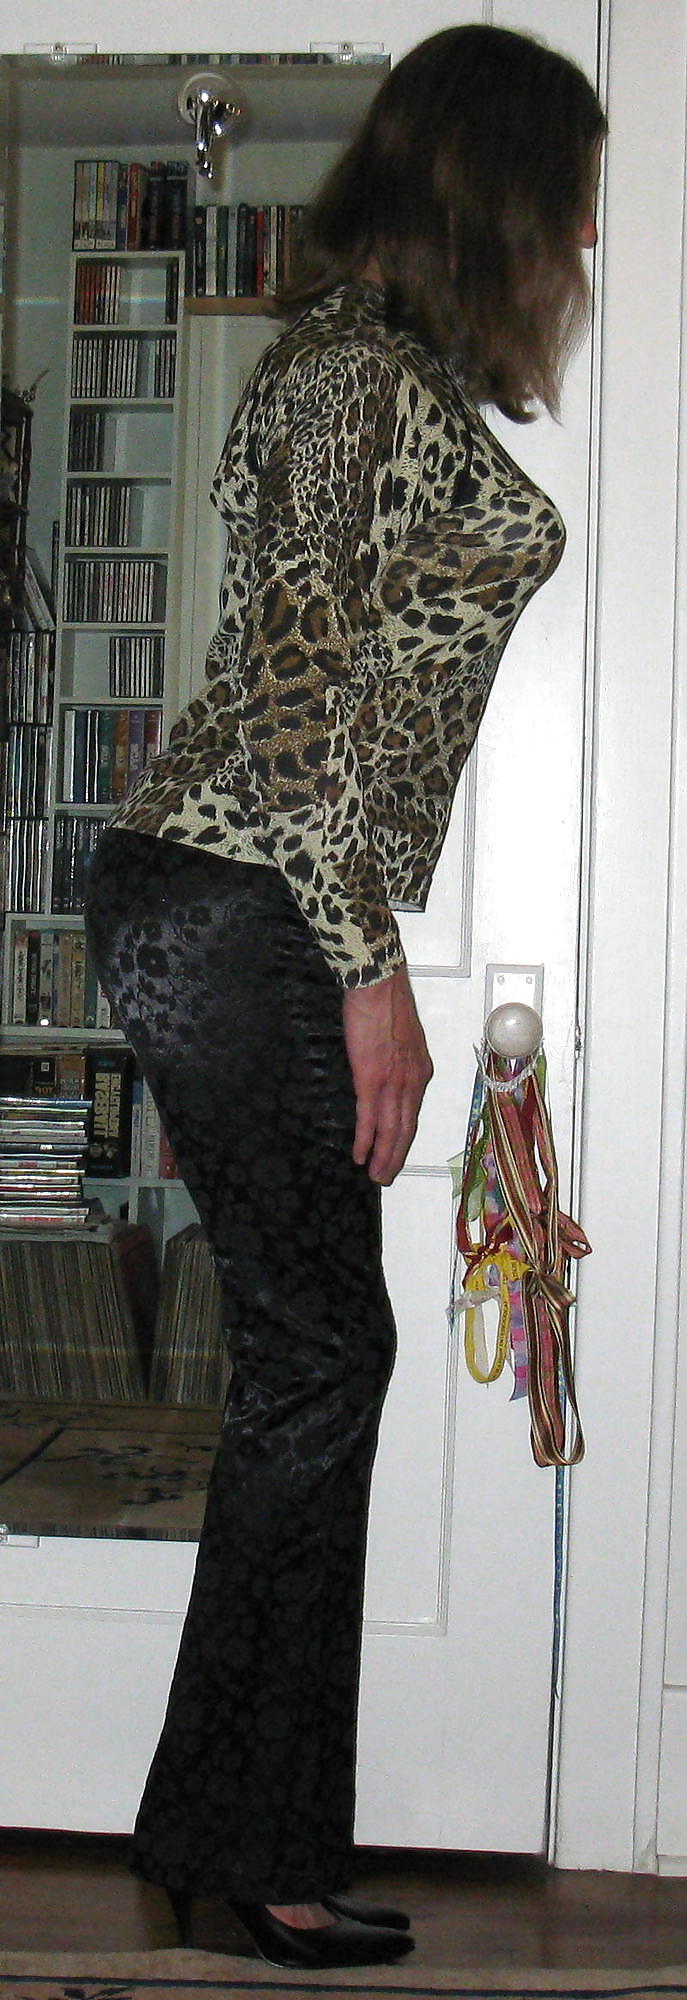 Crossdressing - ragazza leopardo
 #7202355